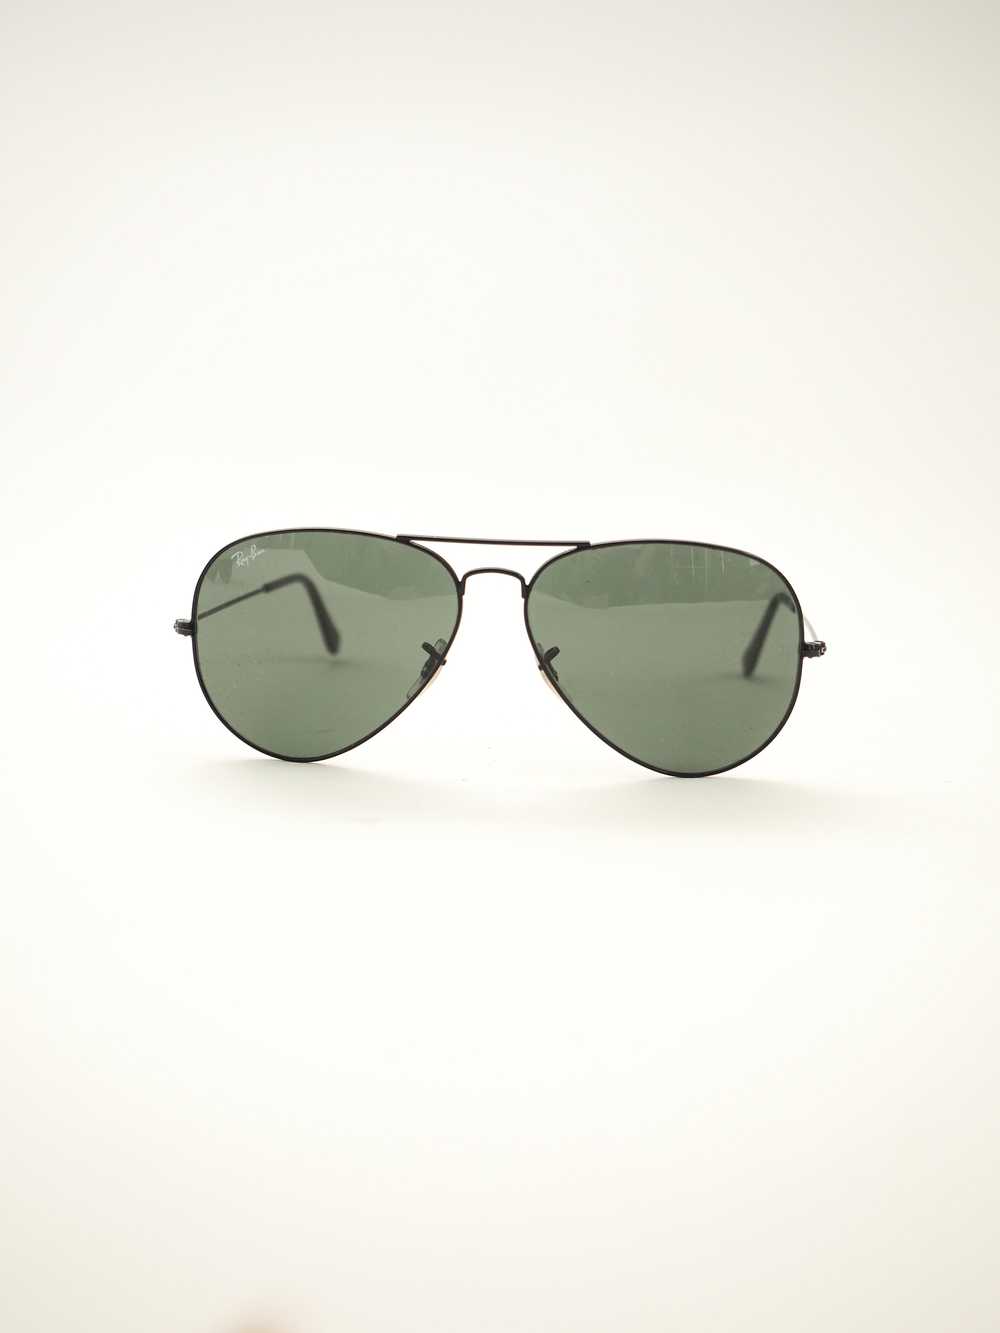 RayBan Aviator Classic Sunglasses - image 2